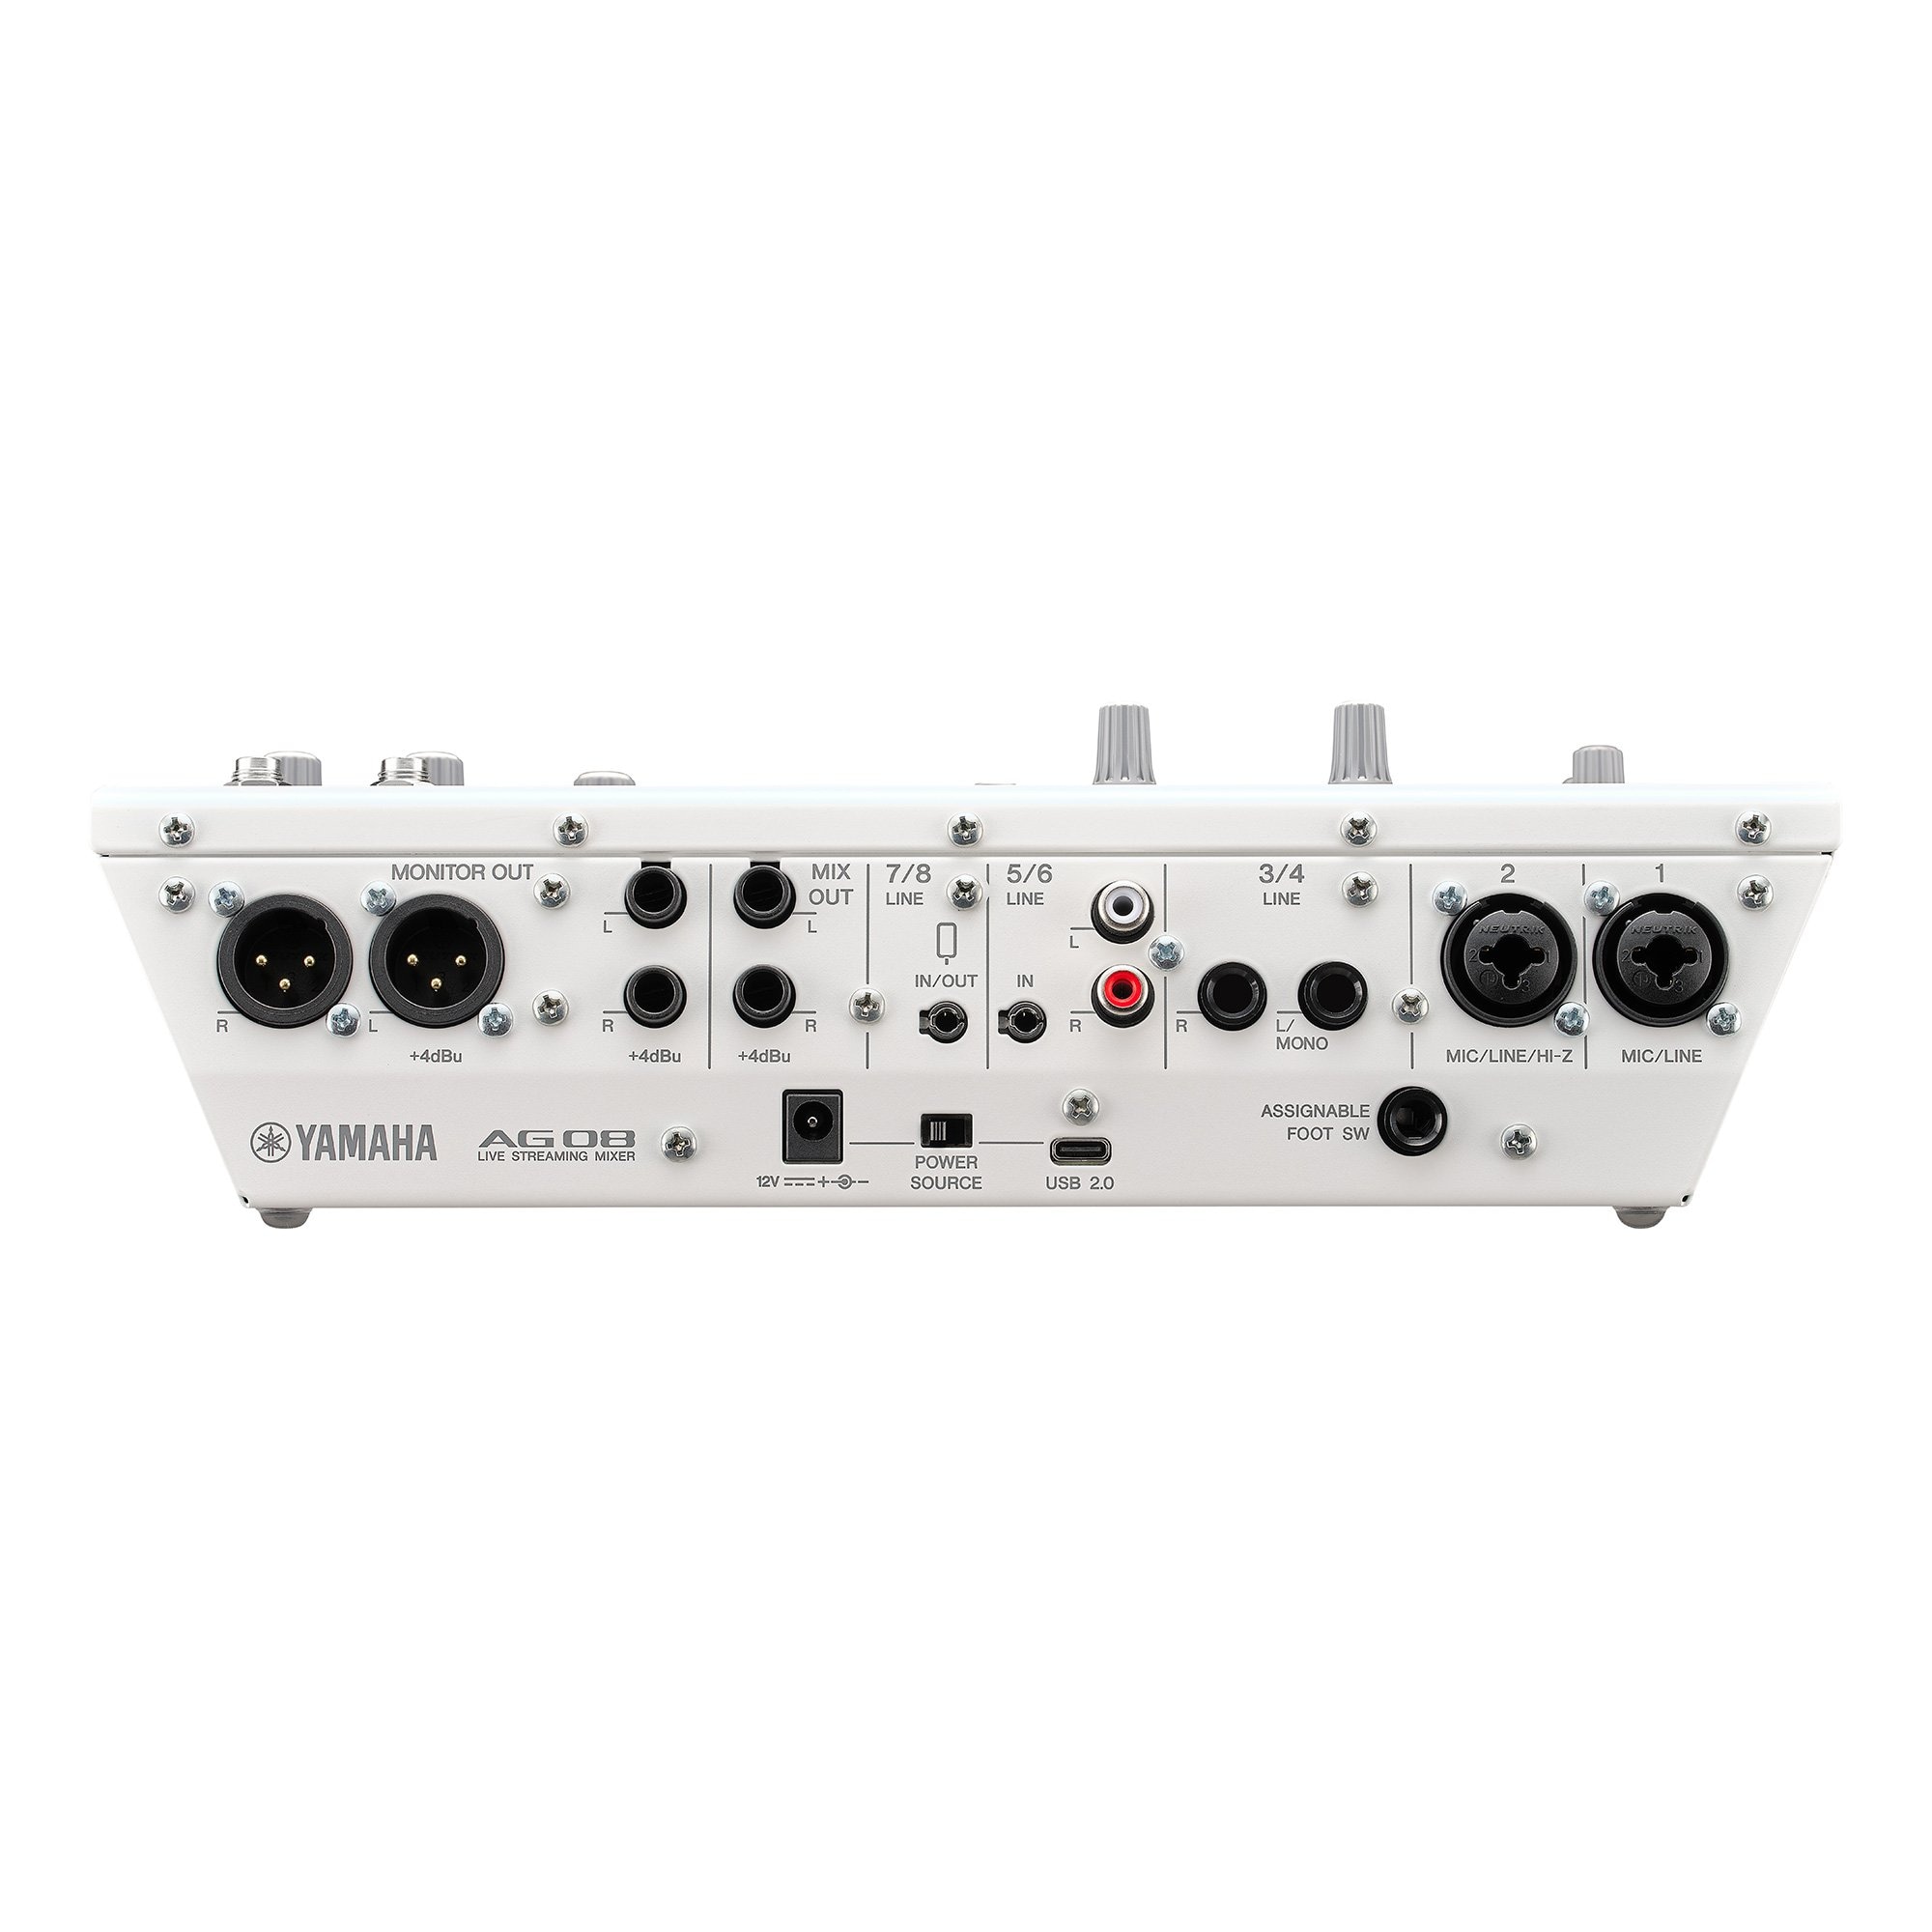 AG08 Live Streaming Mixer Example Systems - Yamaha USA